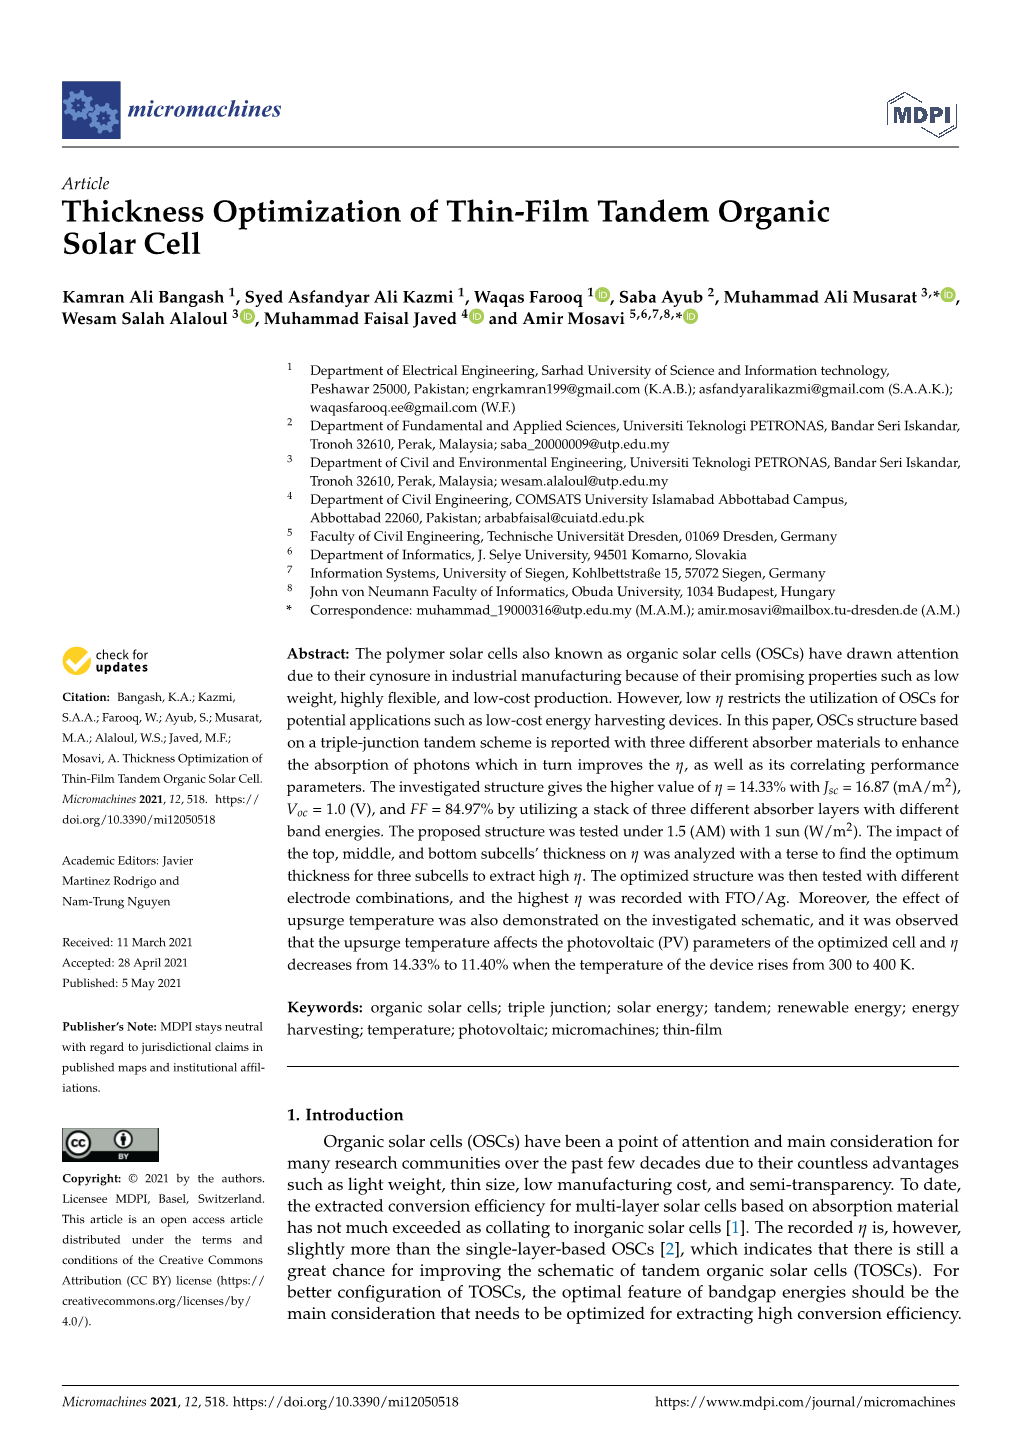 Thickness Optimization of Thin-Film Tandem Organic Solar Cell